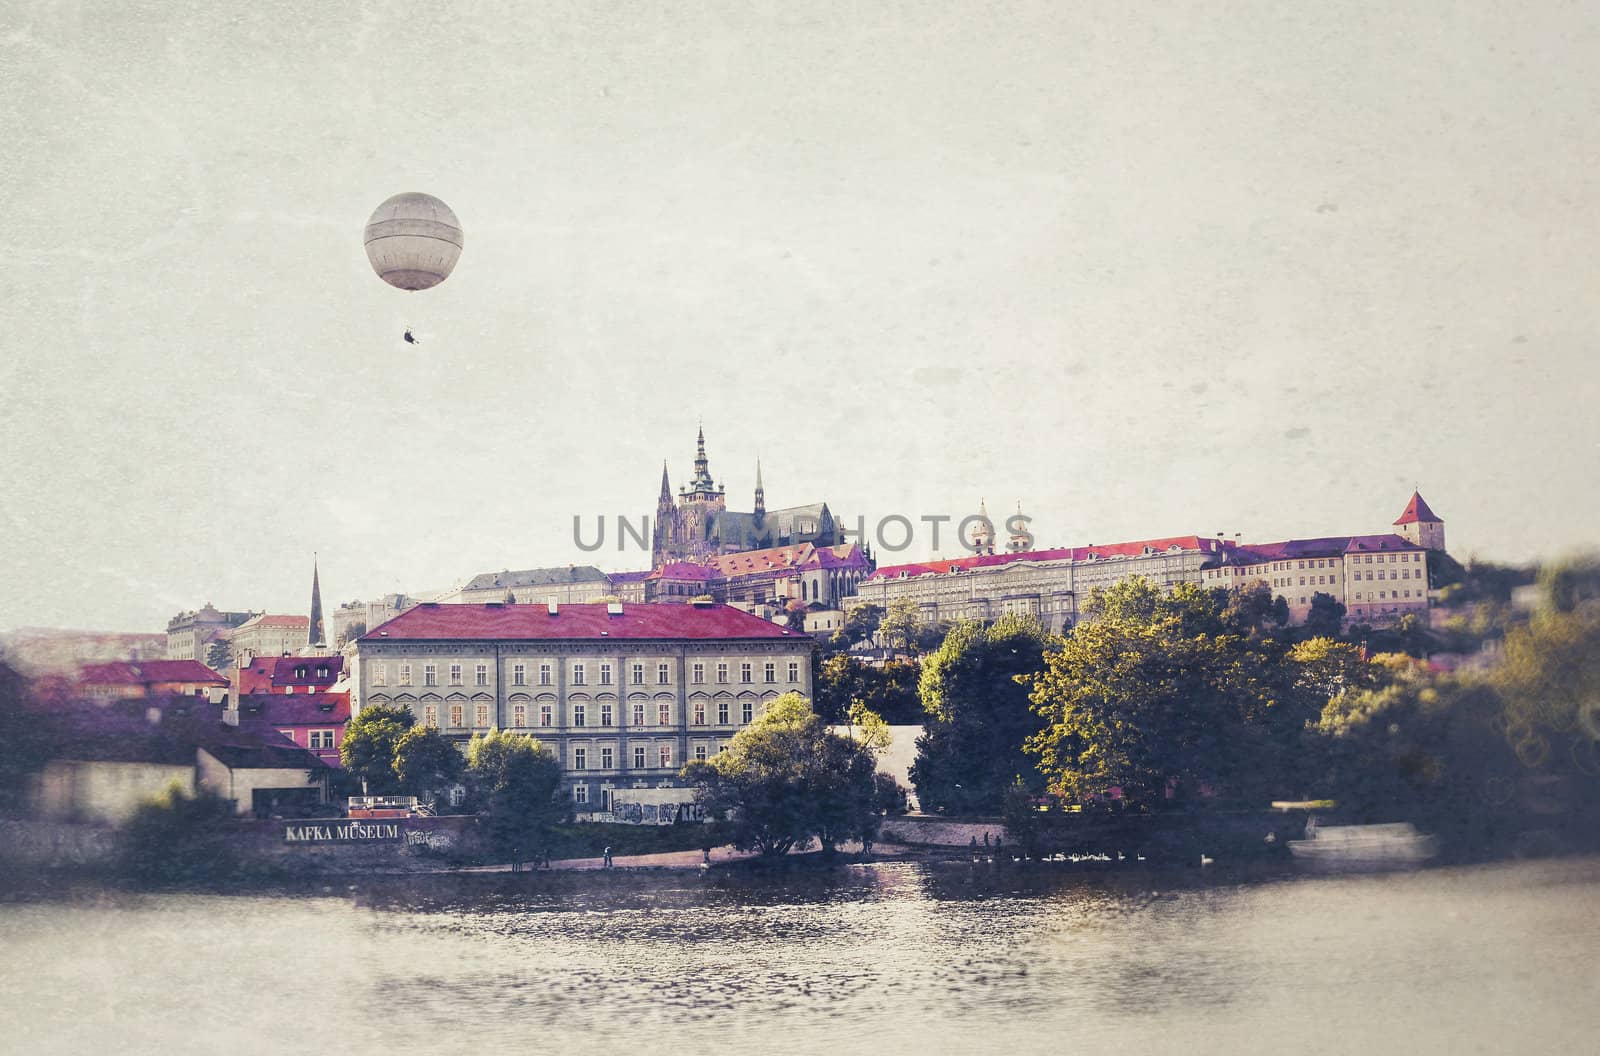 Prague Photo in vintage style. Balloon over the river Vltava near the museum of Franz Kafka